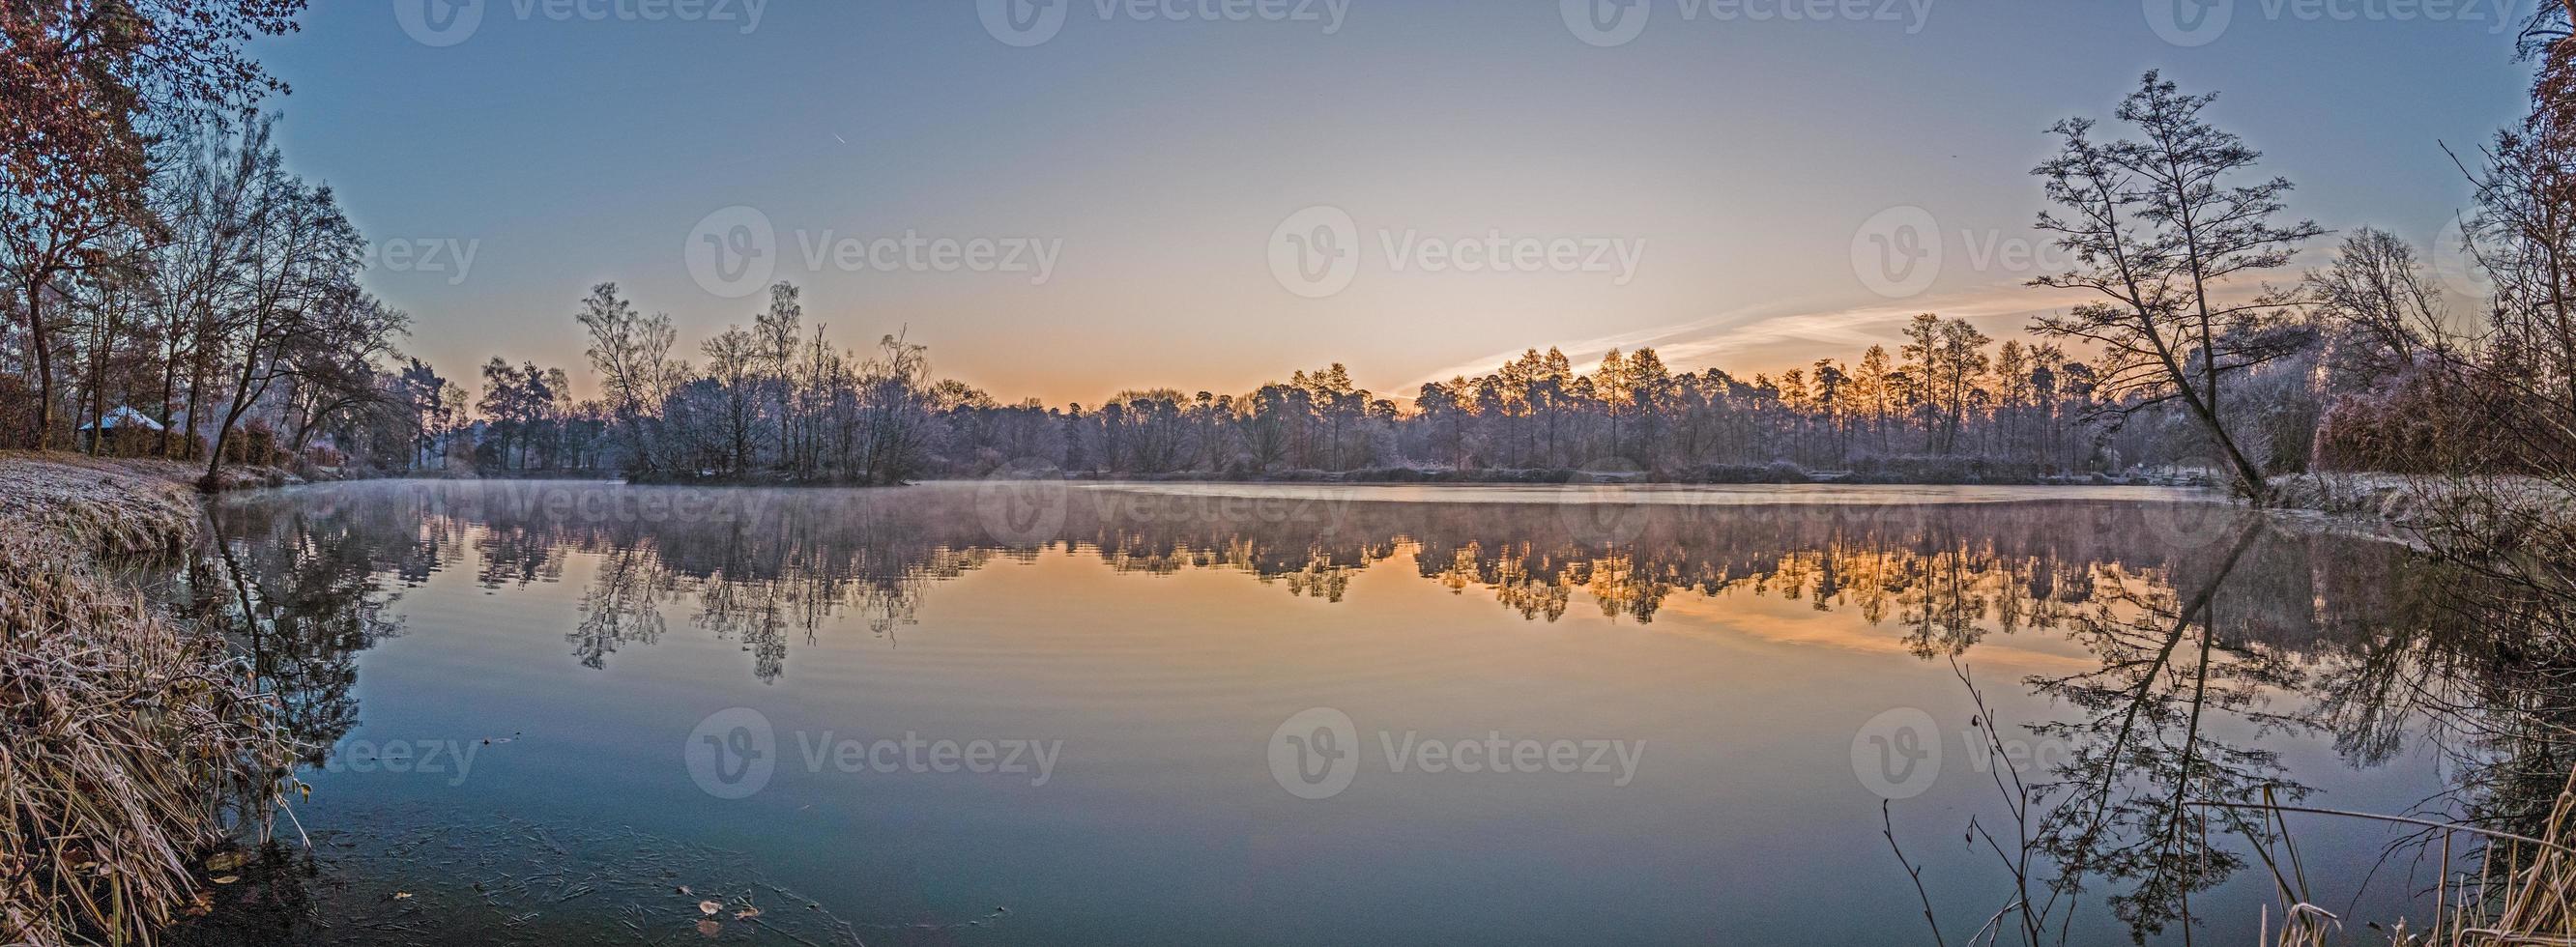 Panoramabild des zugefrorenen Sees bei frostiger Temperatur bei Sonnenaufgang foto